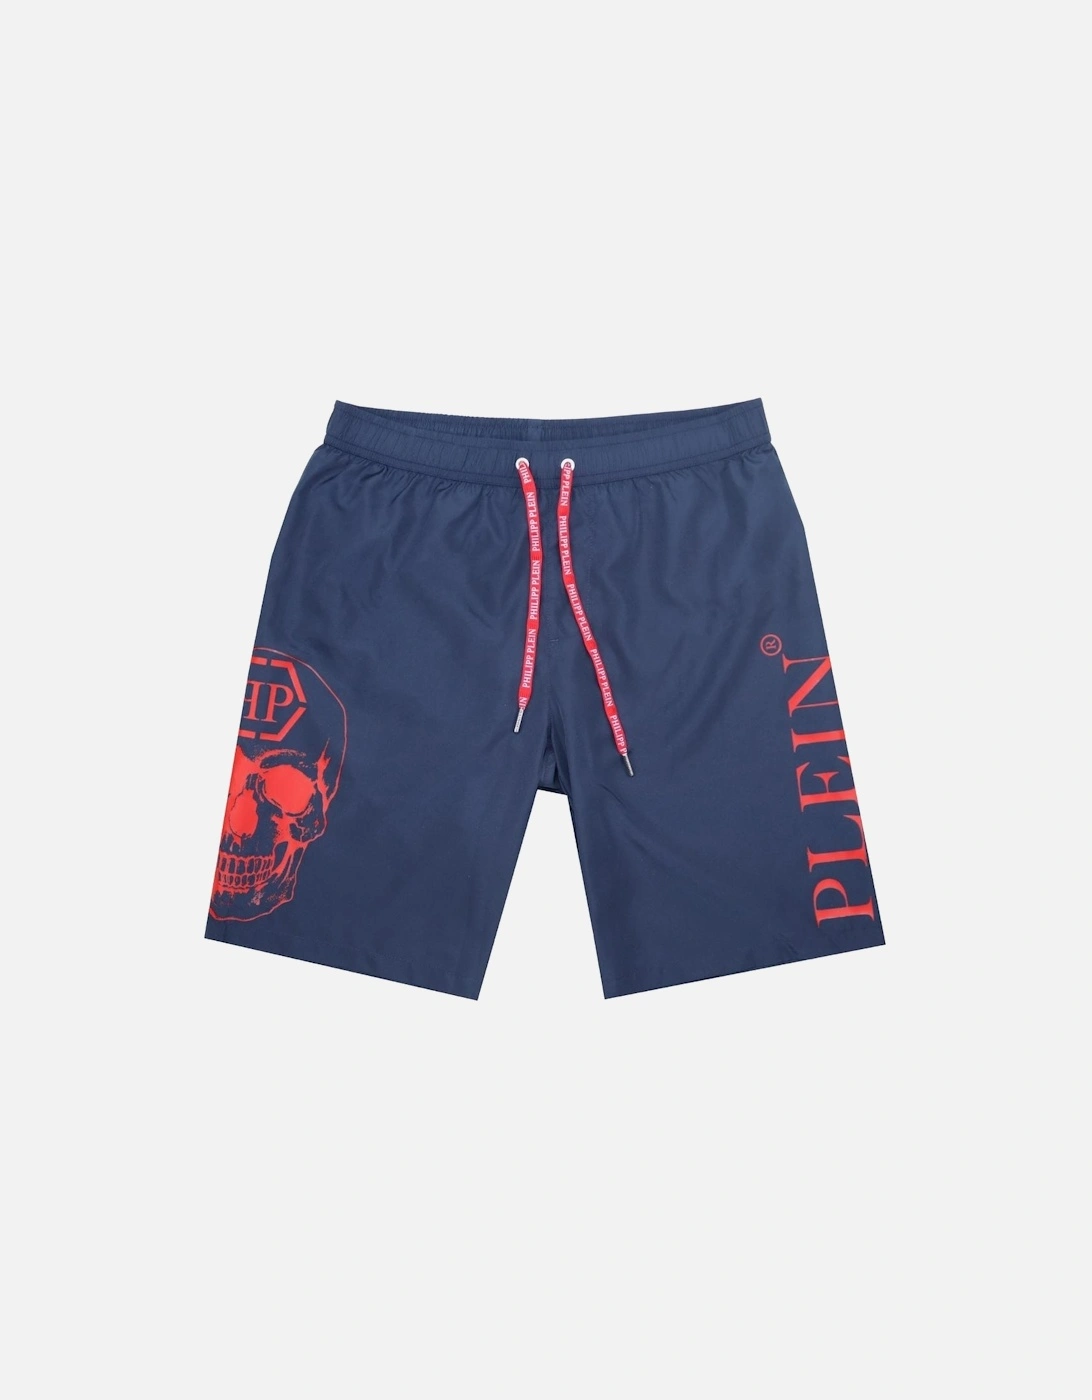 Men's Philipp Plein PP Skull Navy Blue Swim Shorts - Size: 35/34/32